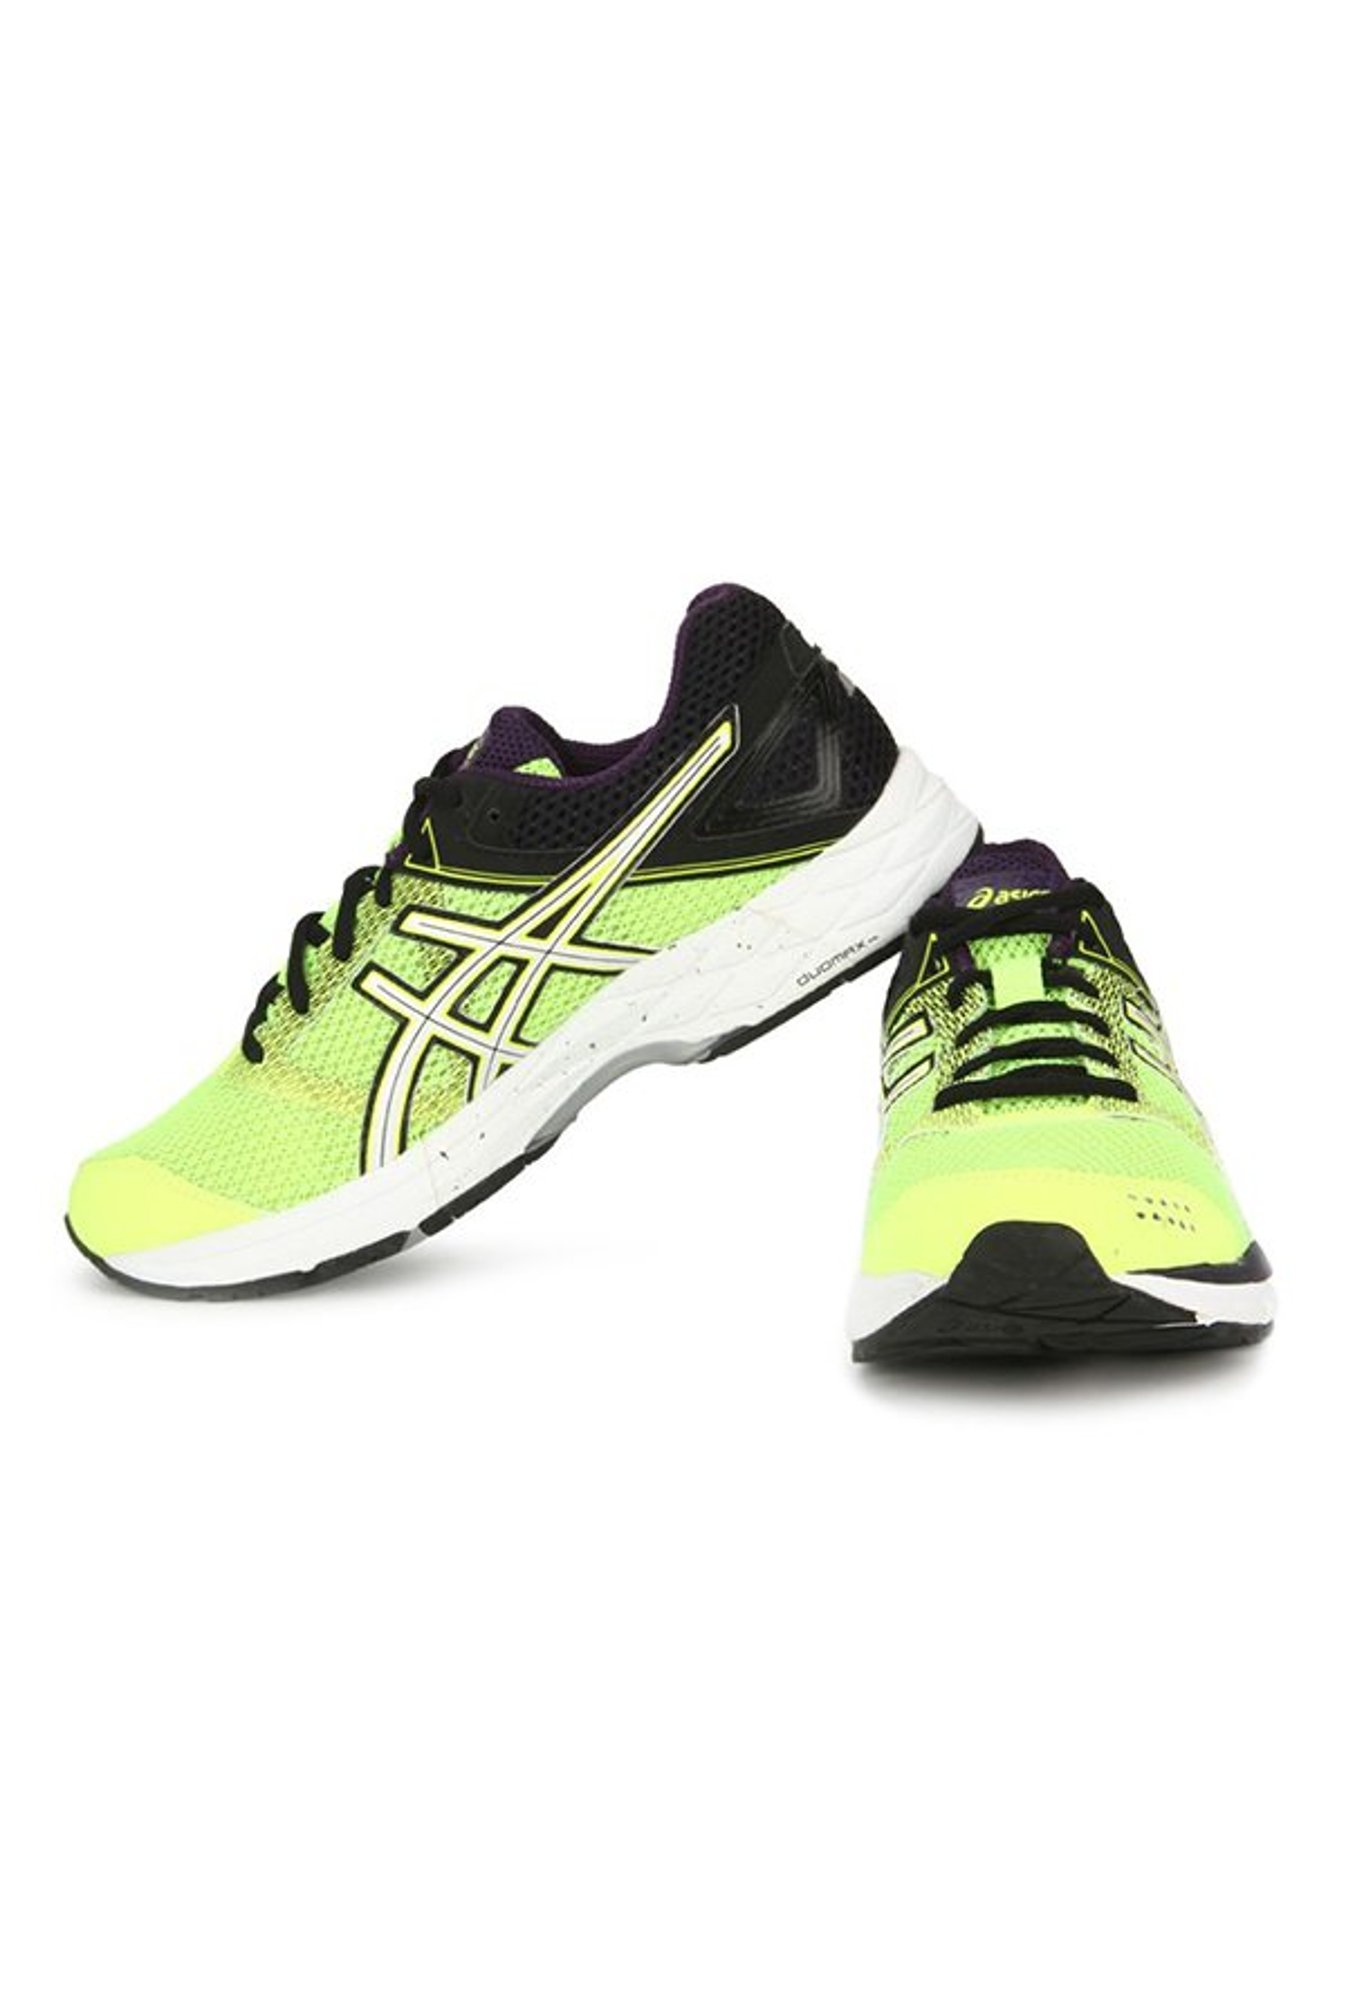 Buy Gel-Phoenix 7 Lime & Black Running Shoes for Men at Price @ Tata CLiQ